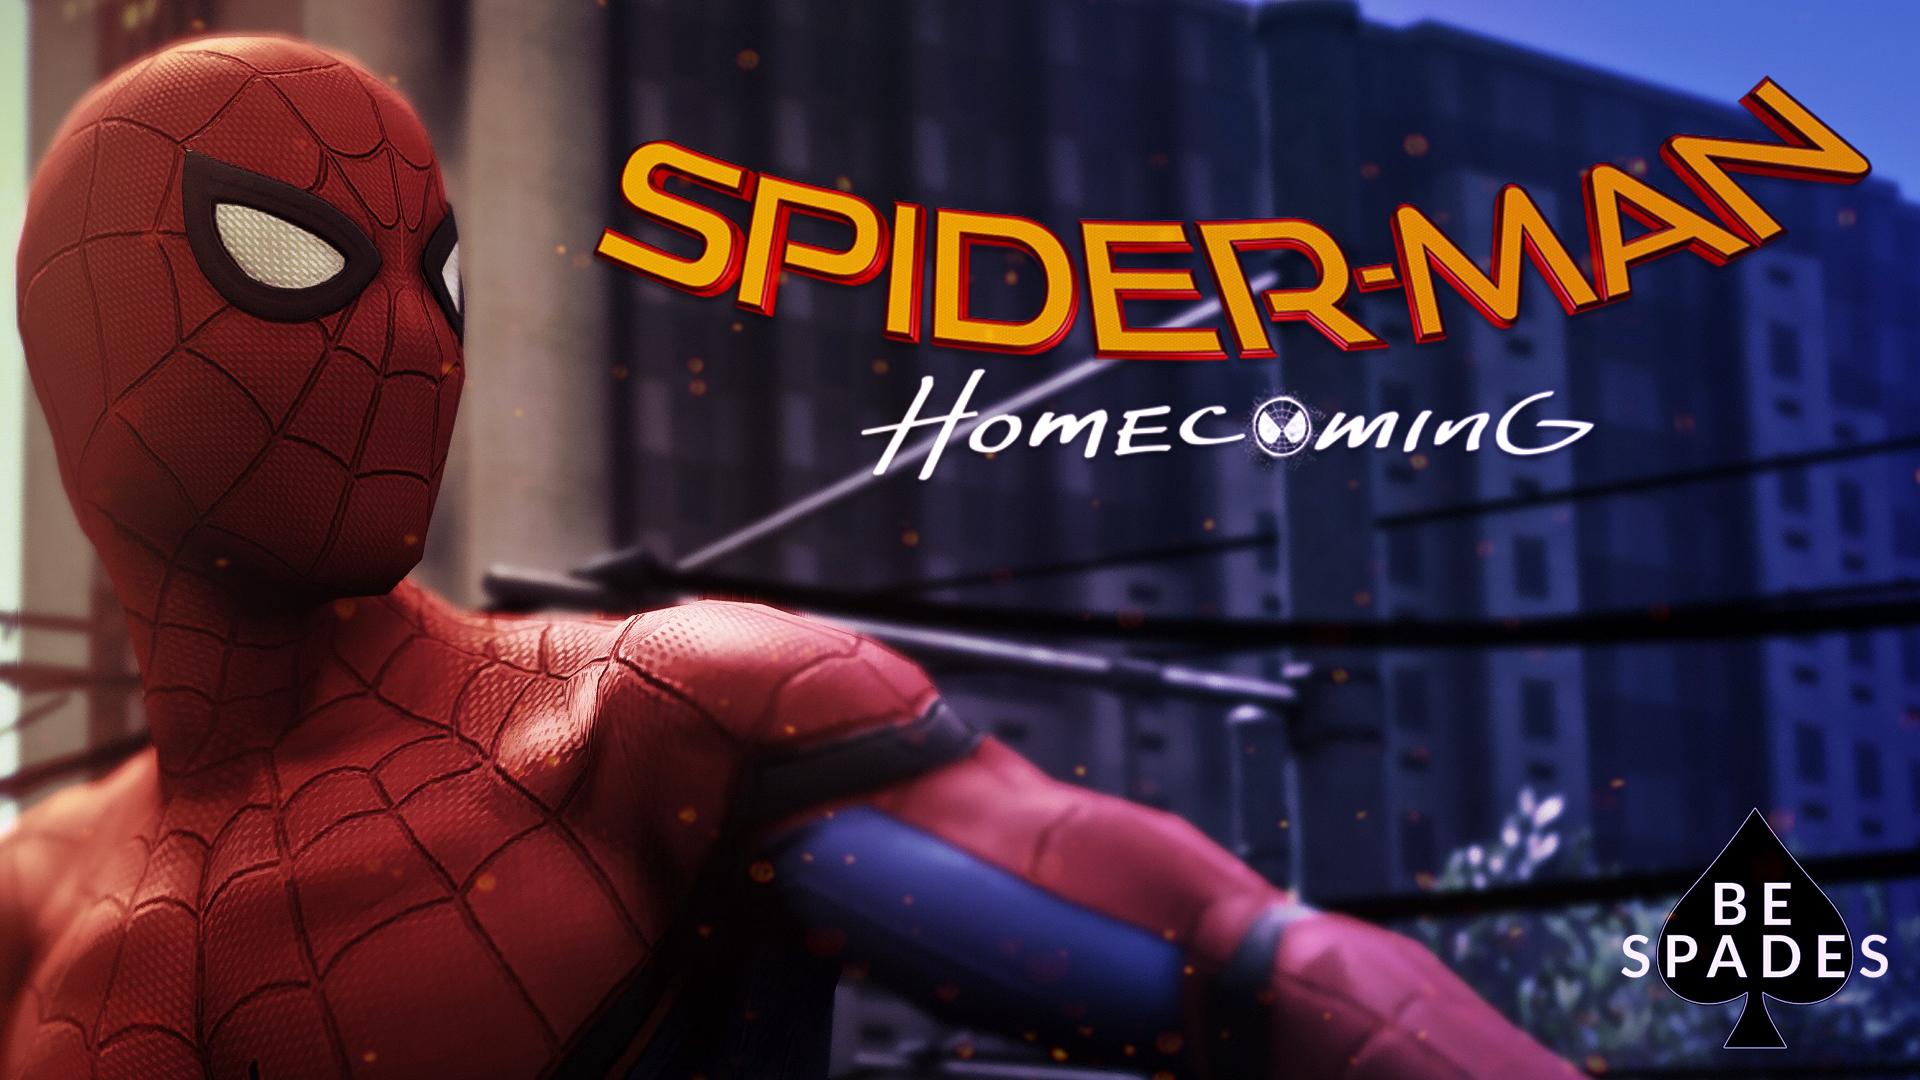 Spider-Man Web Of Shadows [PC MOD] PS4 Spider-Punk Suits (+Exclusive Black  Suit) 